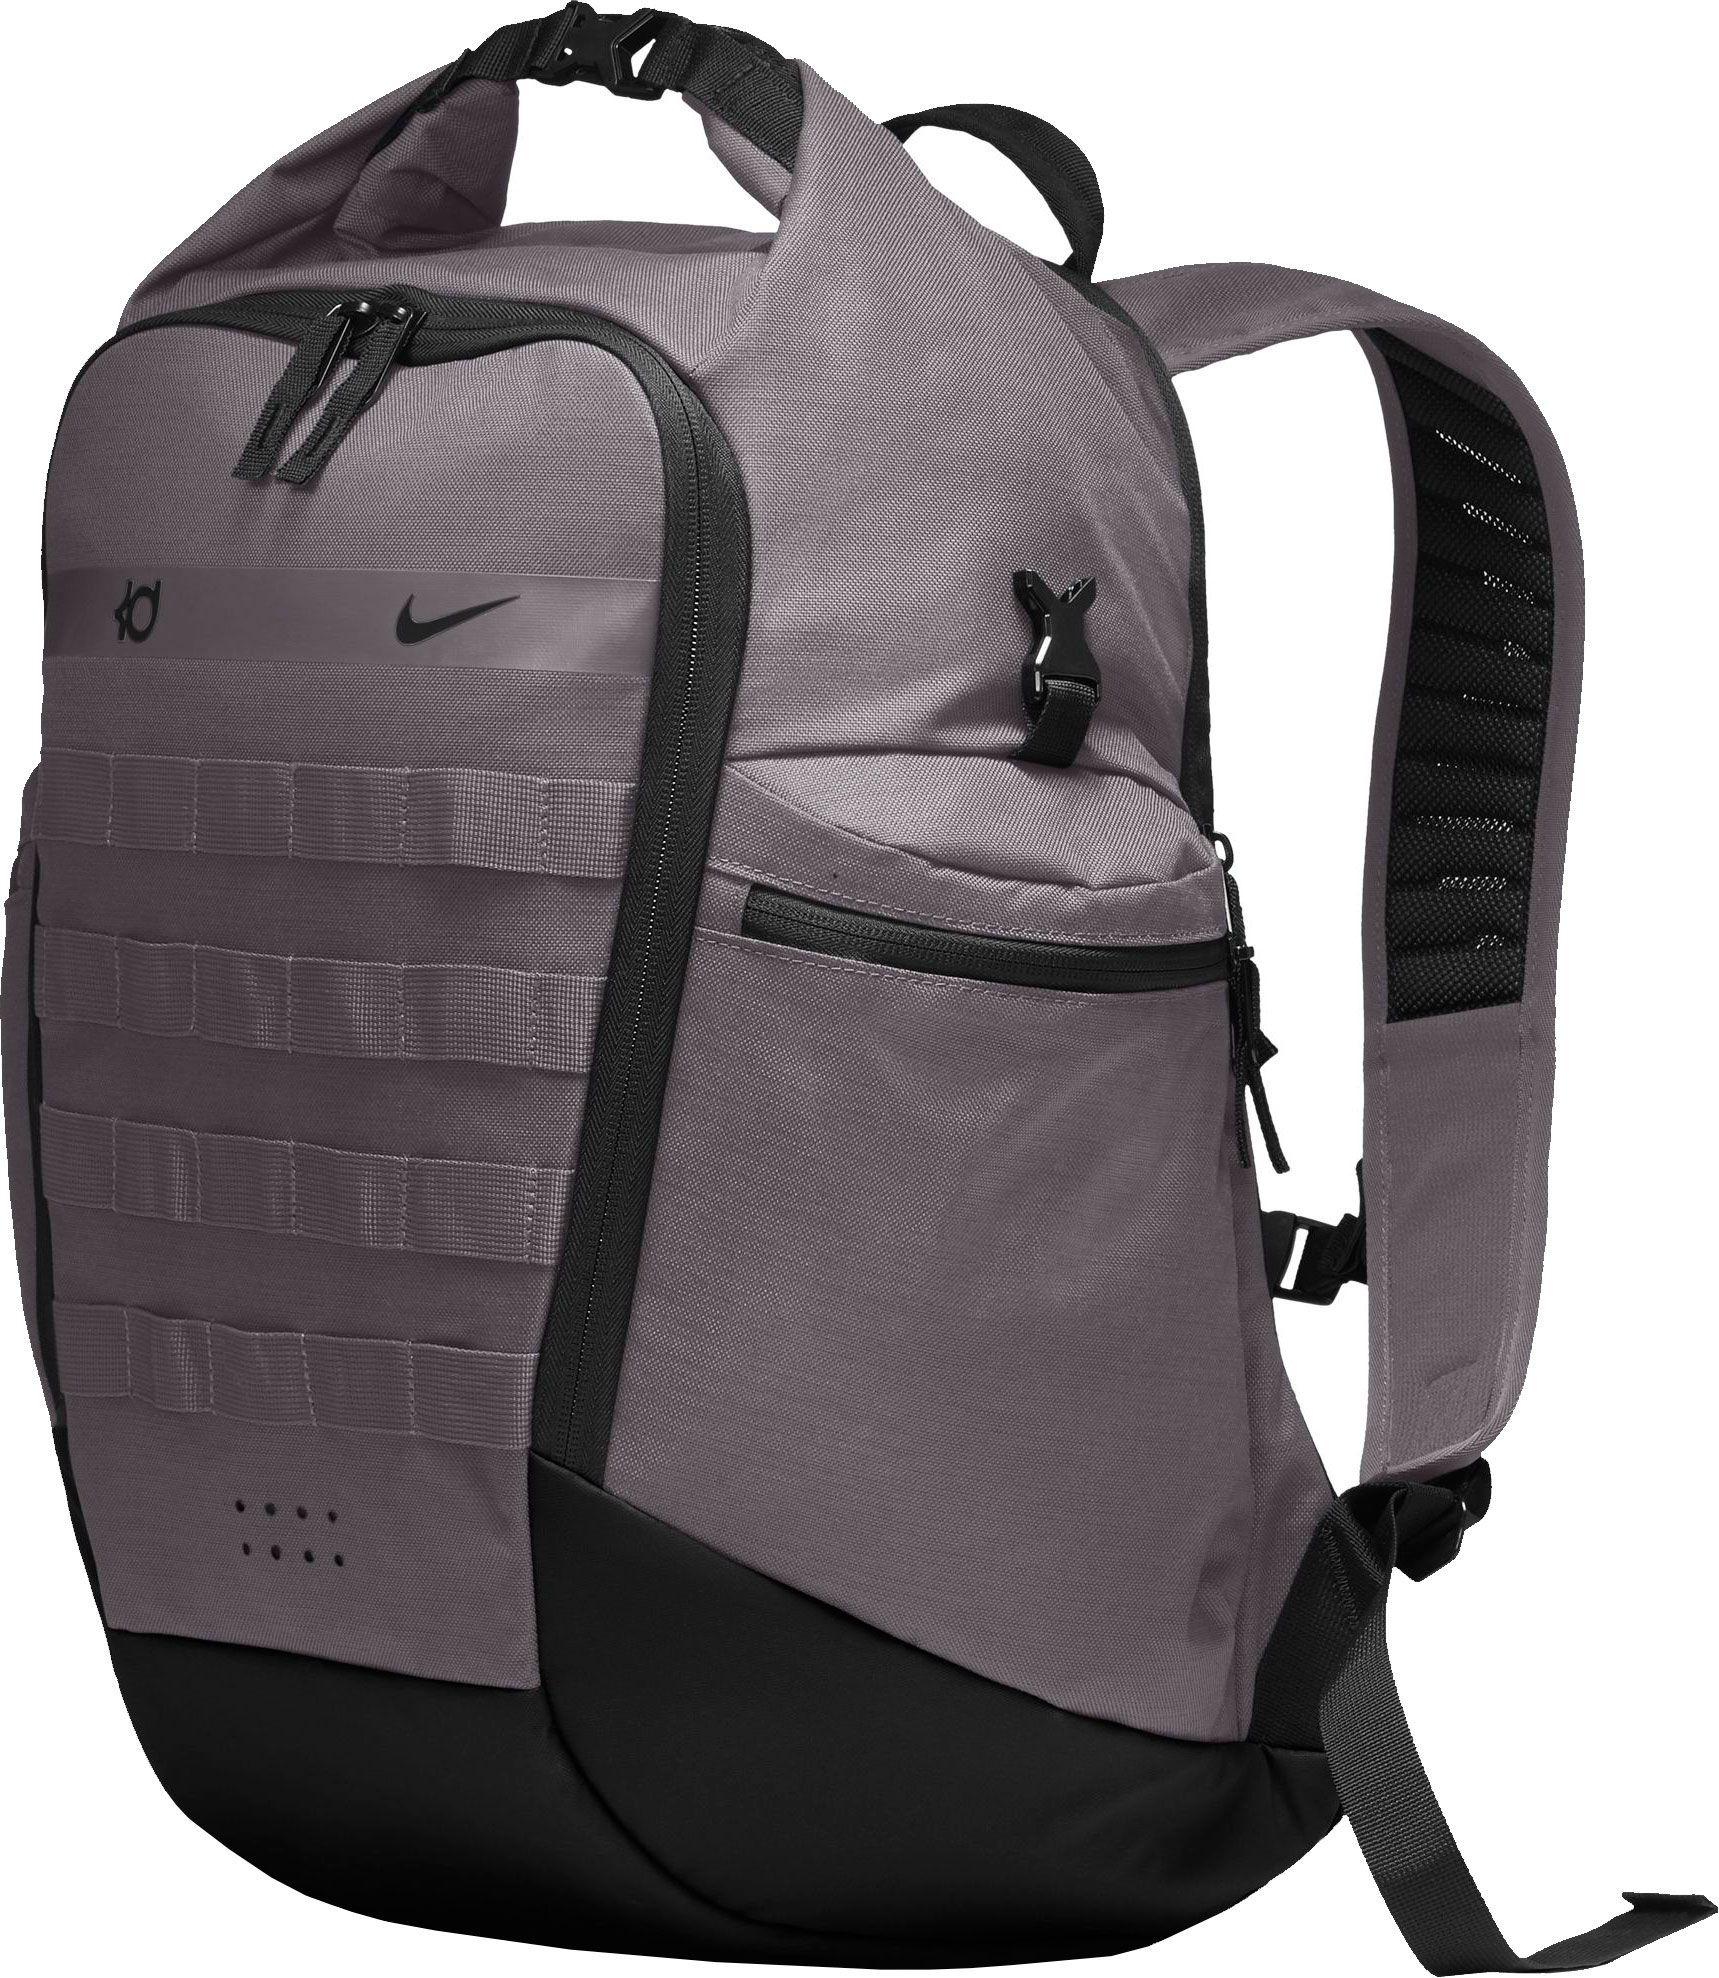 kd trey 5 basketball backpack | Sale 